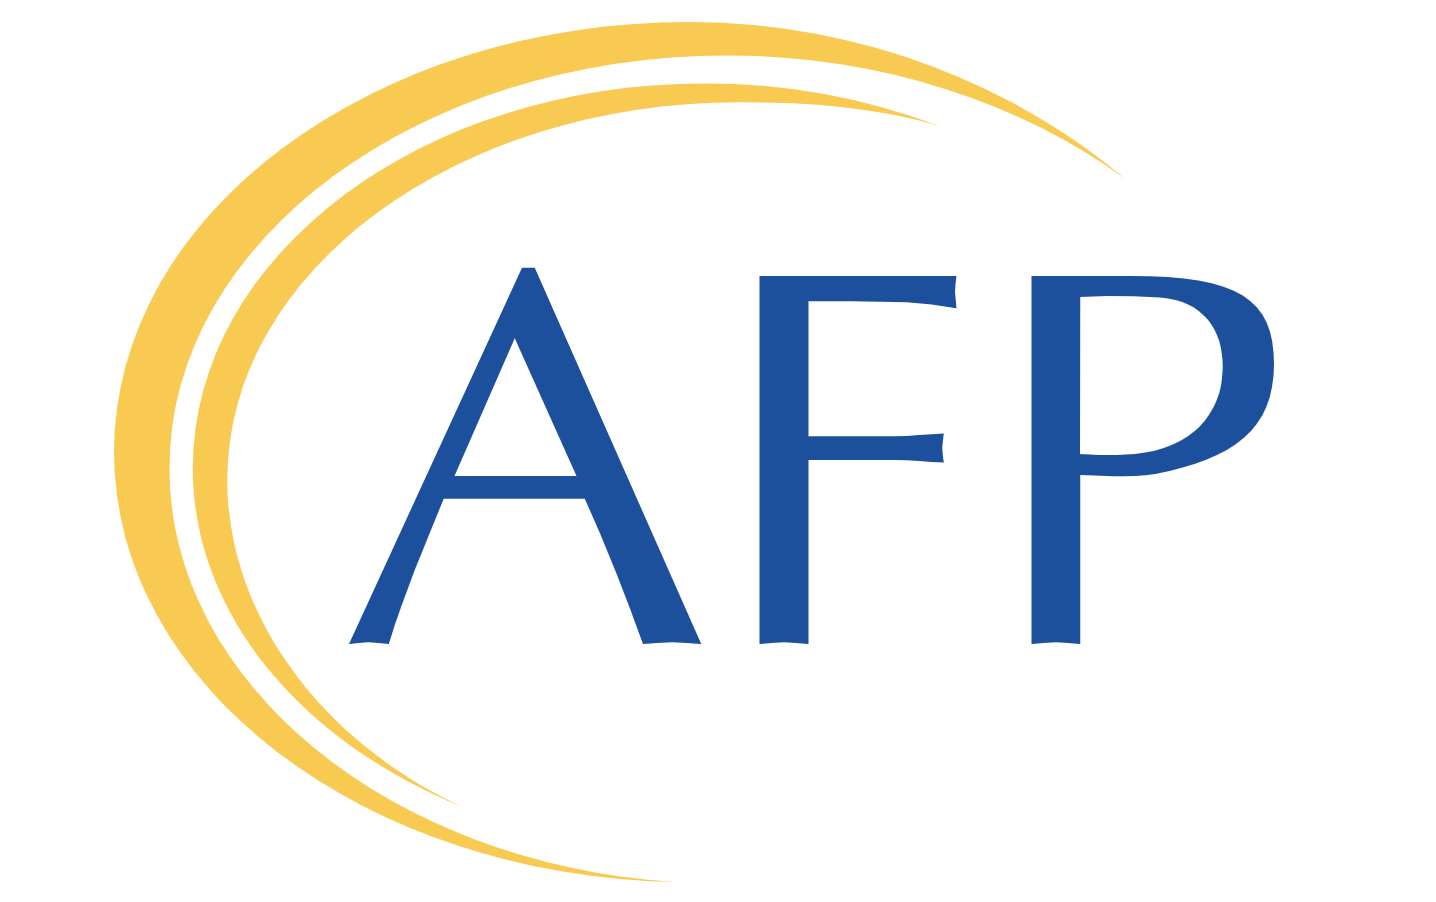 AFP logo